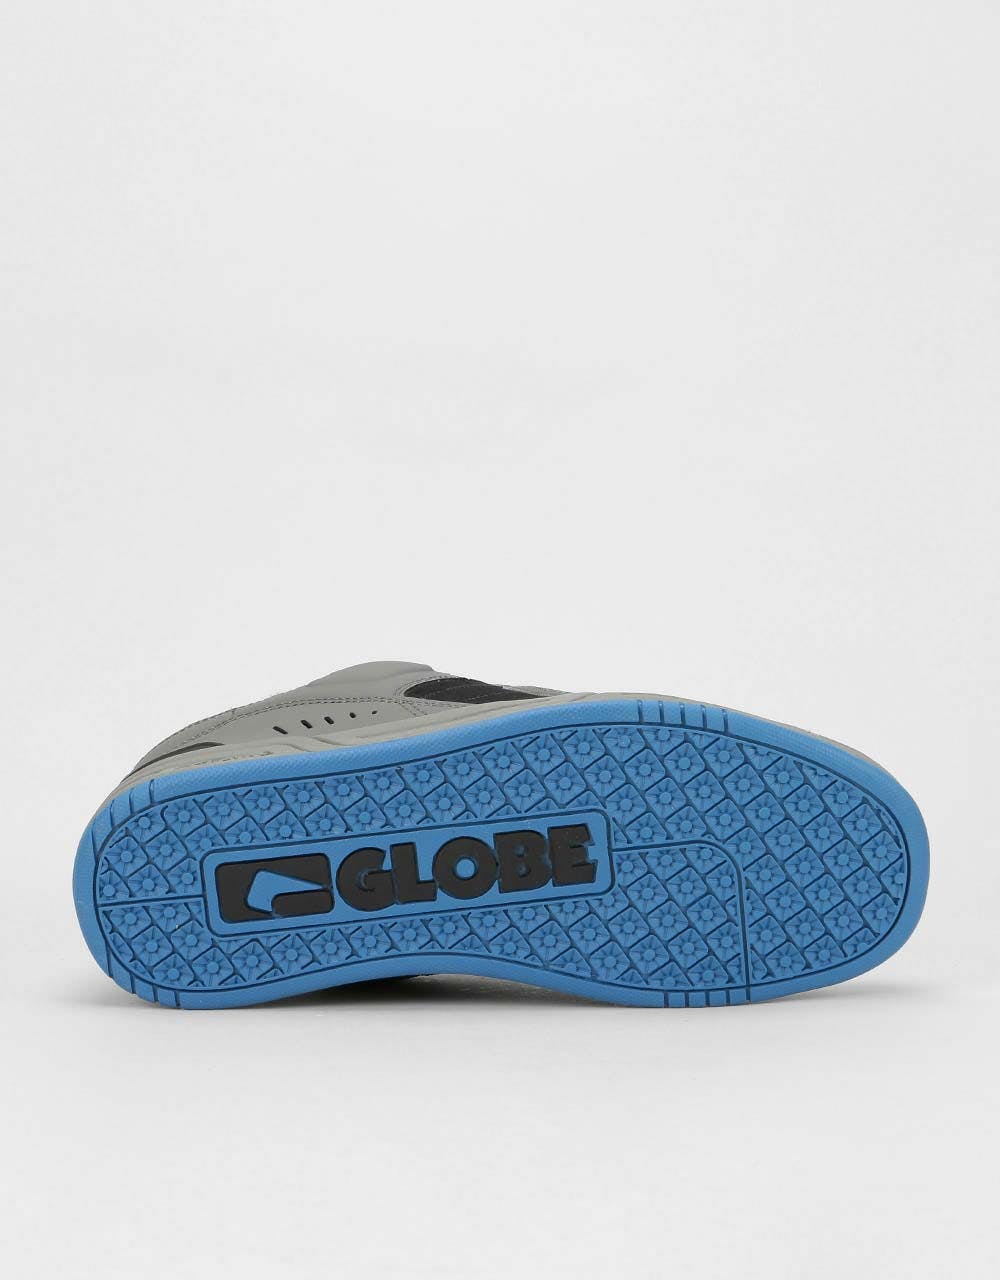 Globe Fusion Skate Shoes - Charcoal/Black/Blue